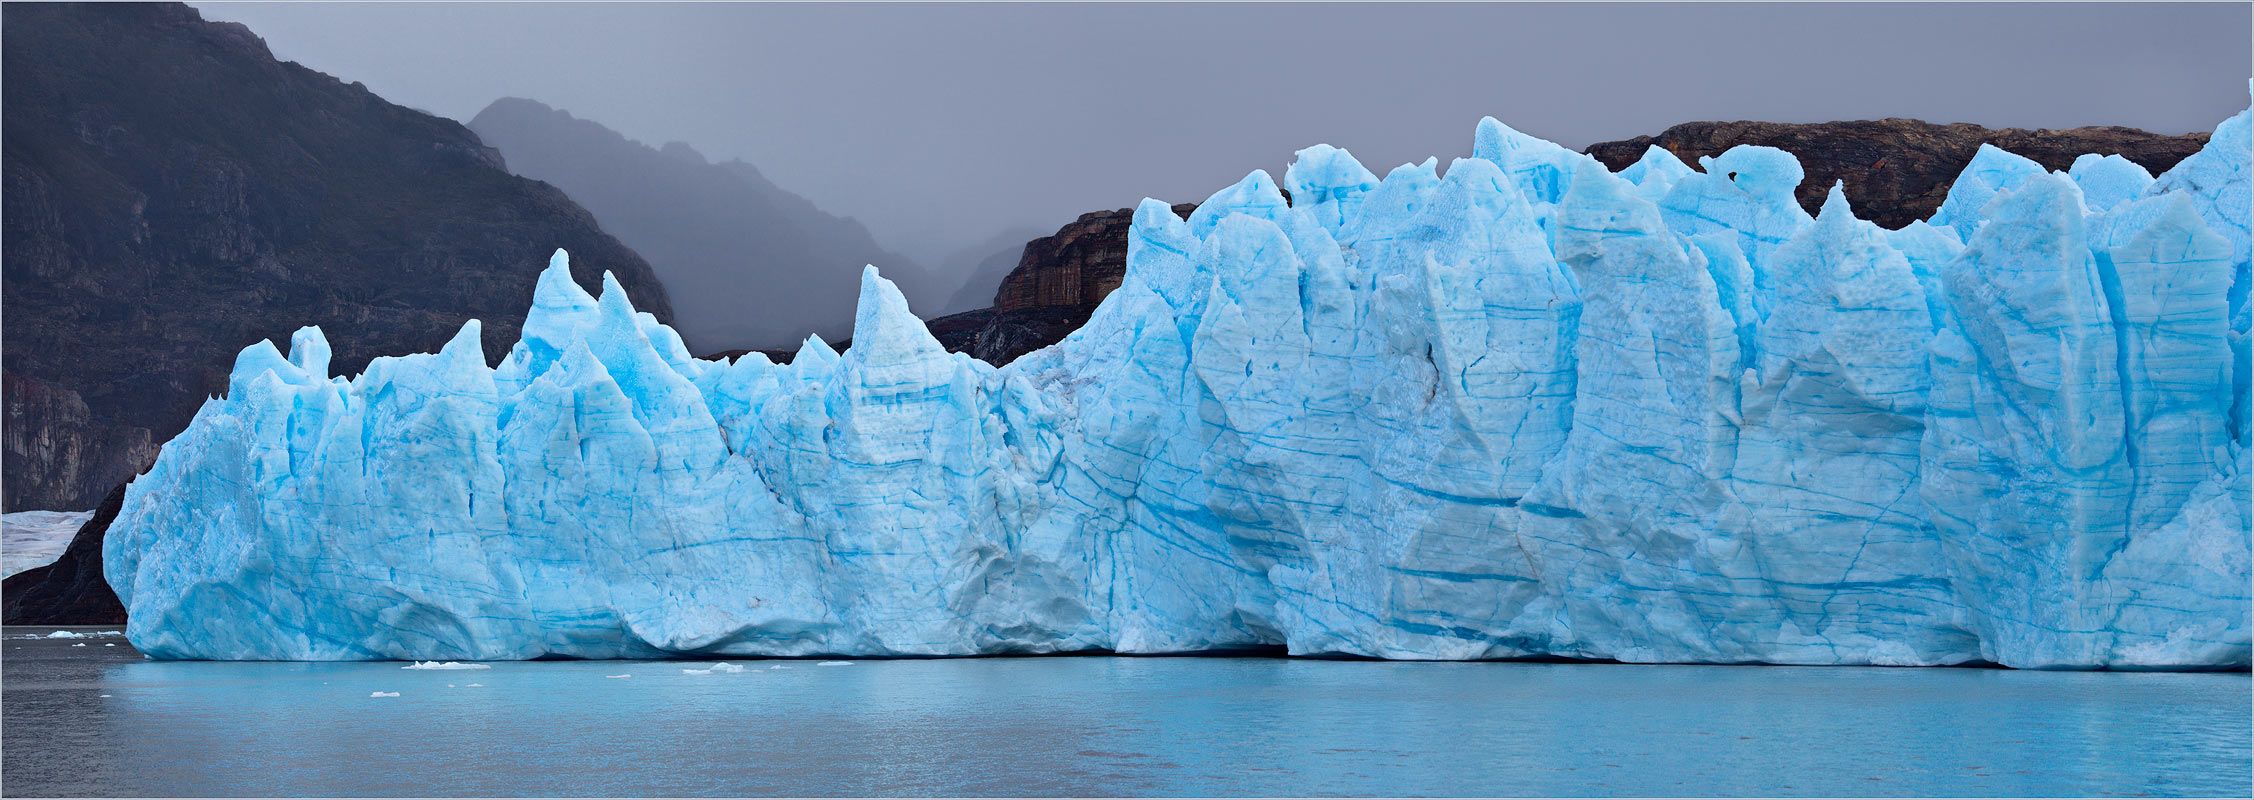 patagonia, chile, lago, gray, gray, glacier, izh Diletant (Валерий Щербина)